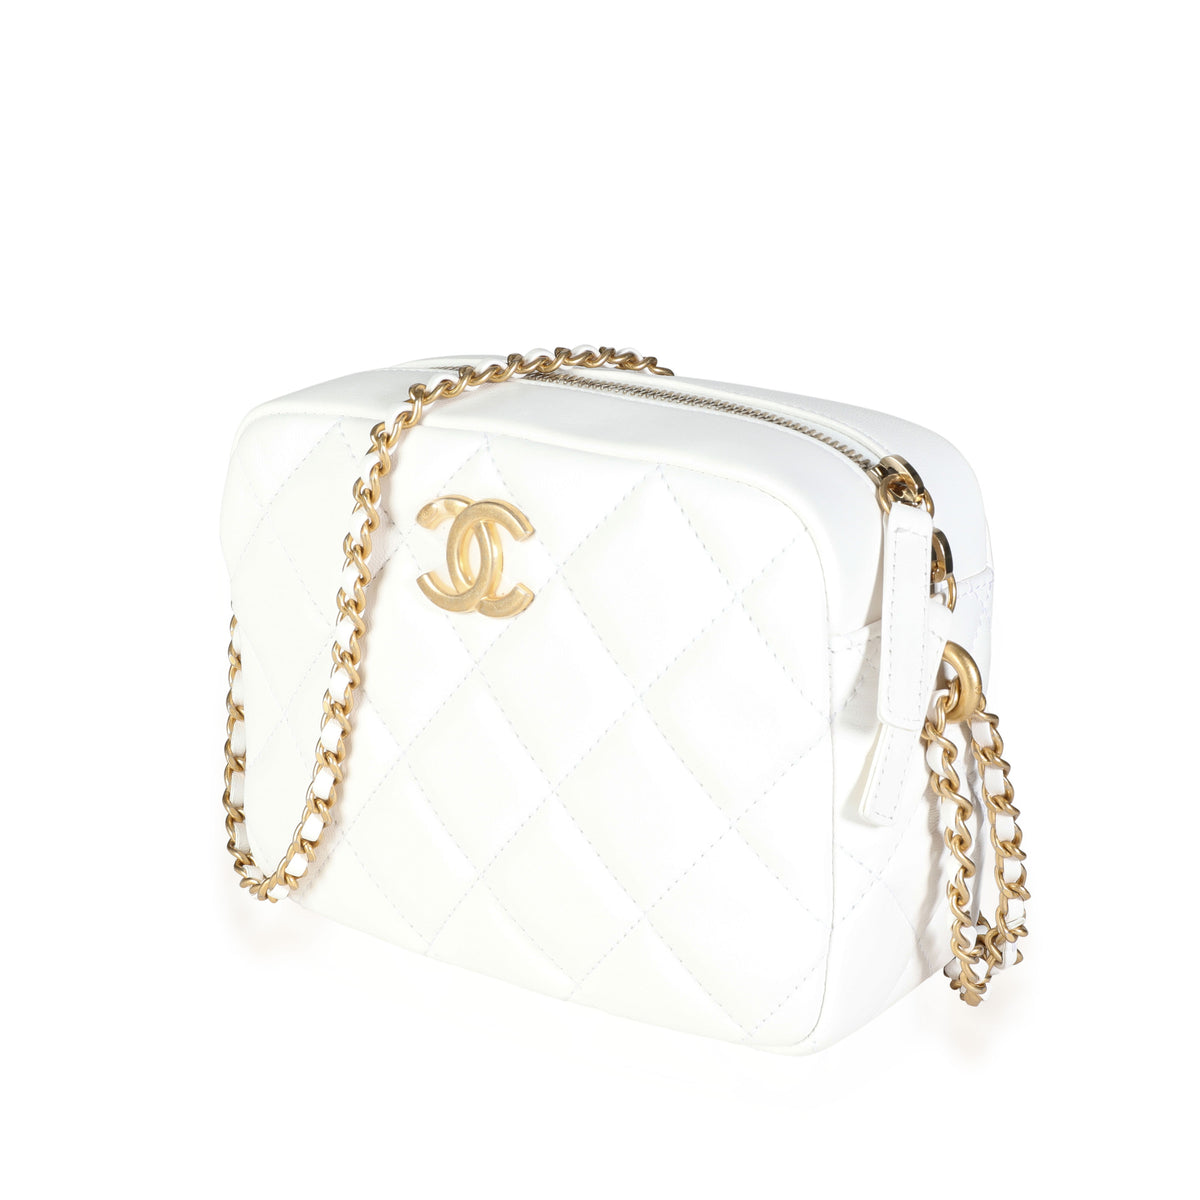 Chanel Camera Bag Small, White Smooth Calfskin, New in Box - Julia